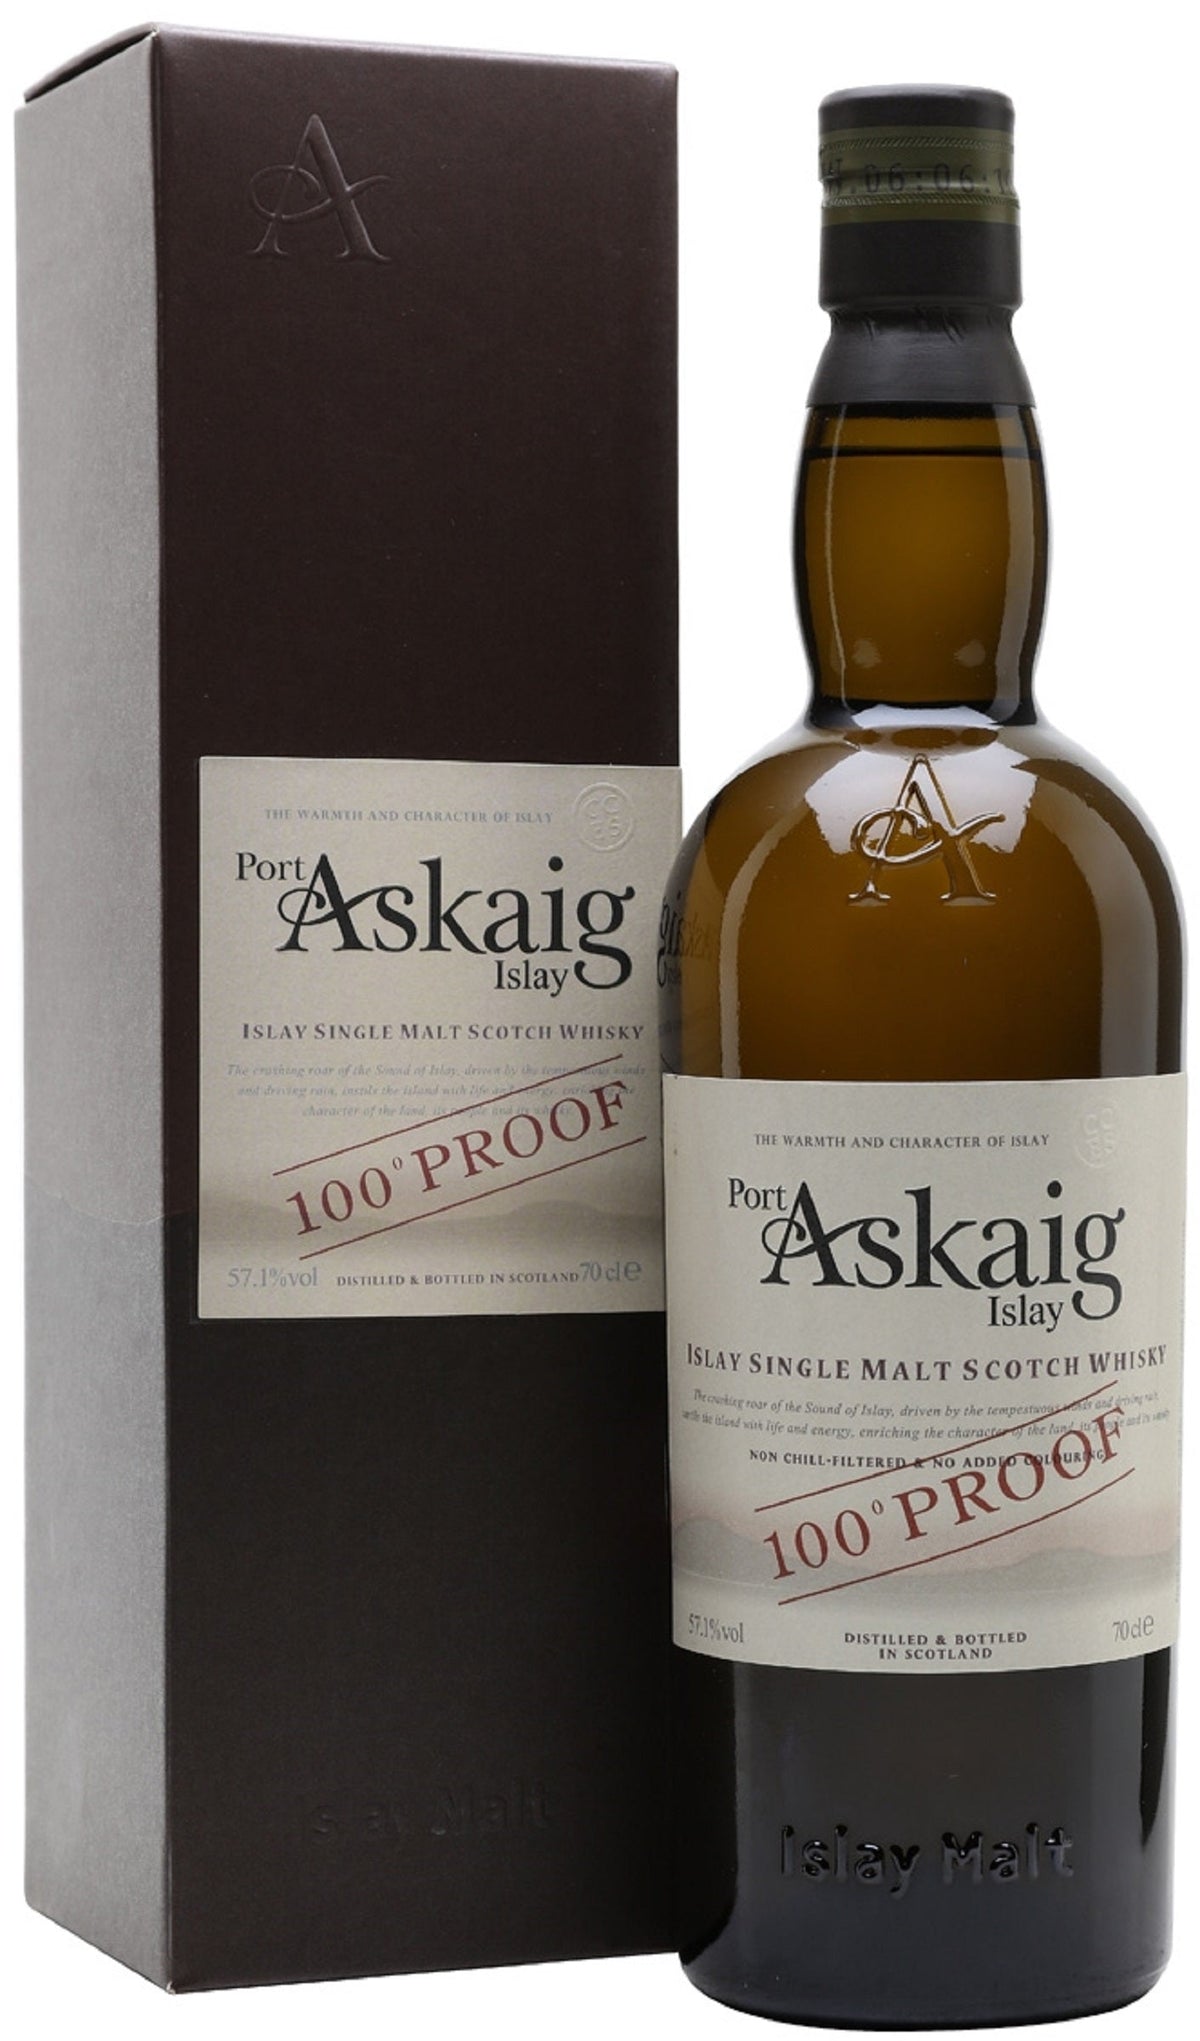 Bottle of Port Askaig 100 Proof Islay Single Malt Scotch Whisky, 57.1% - The Spirits Room